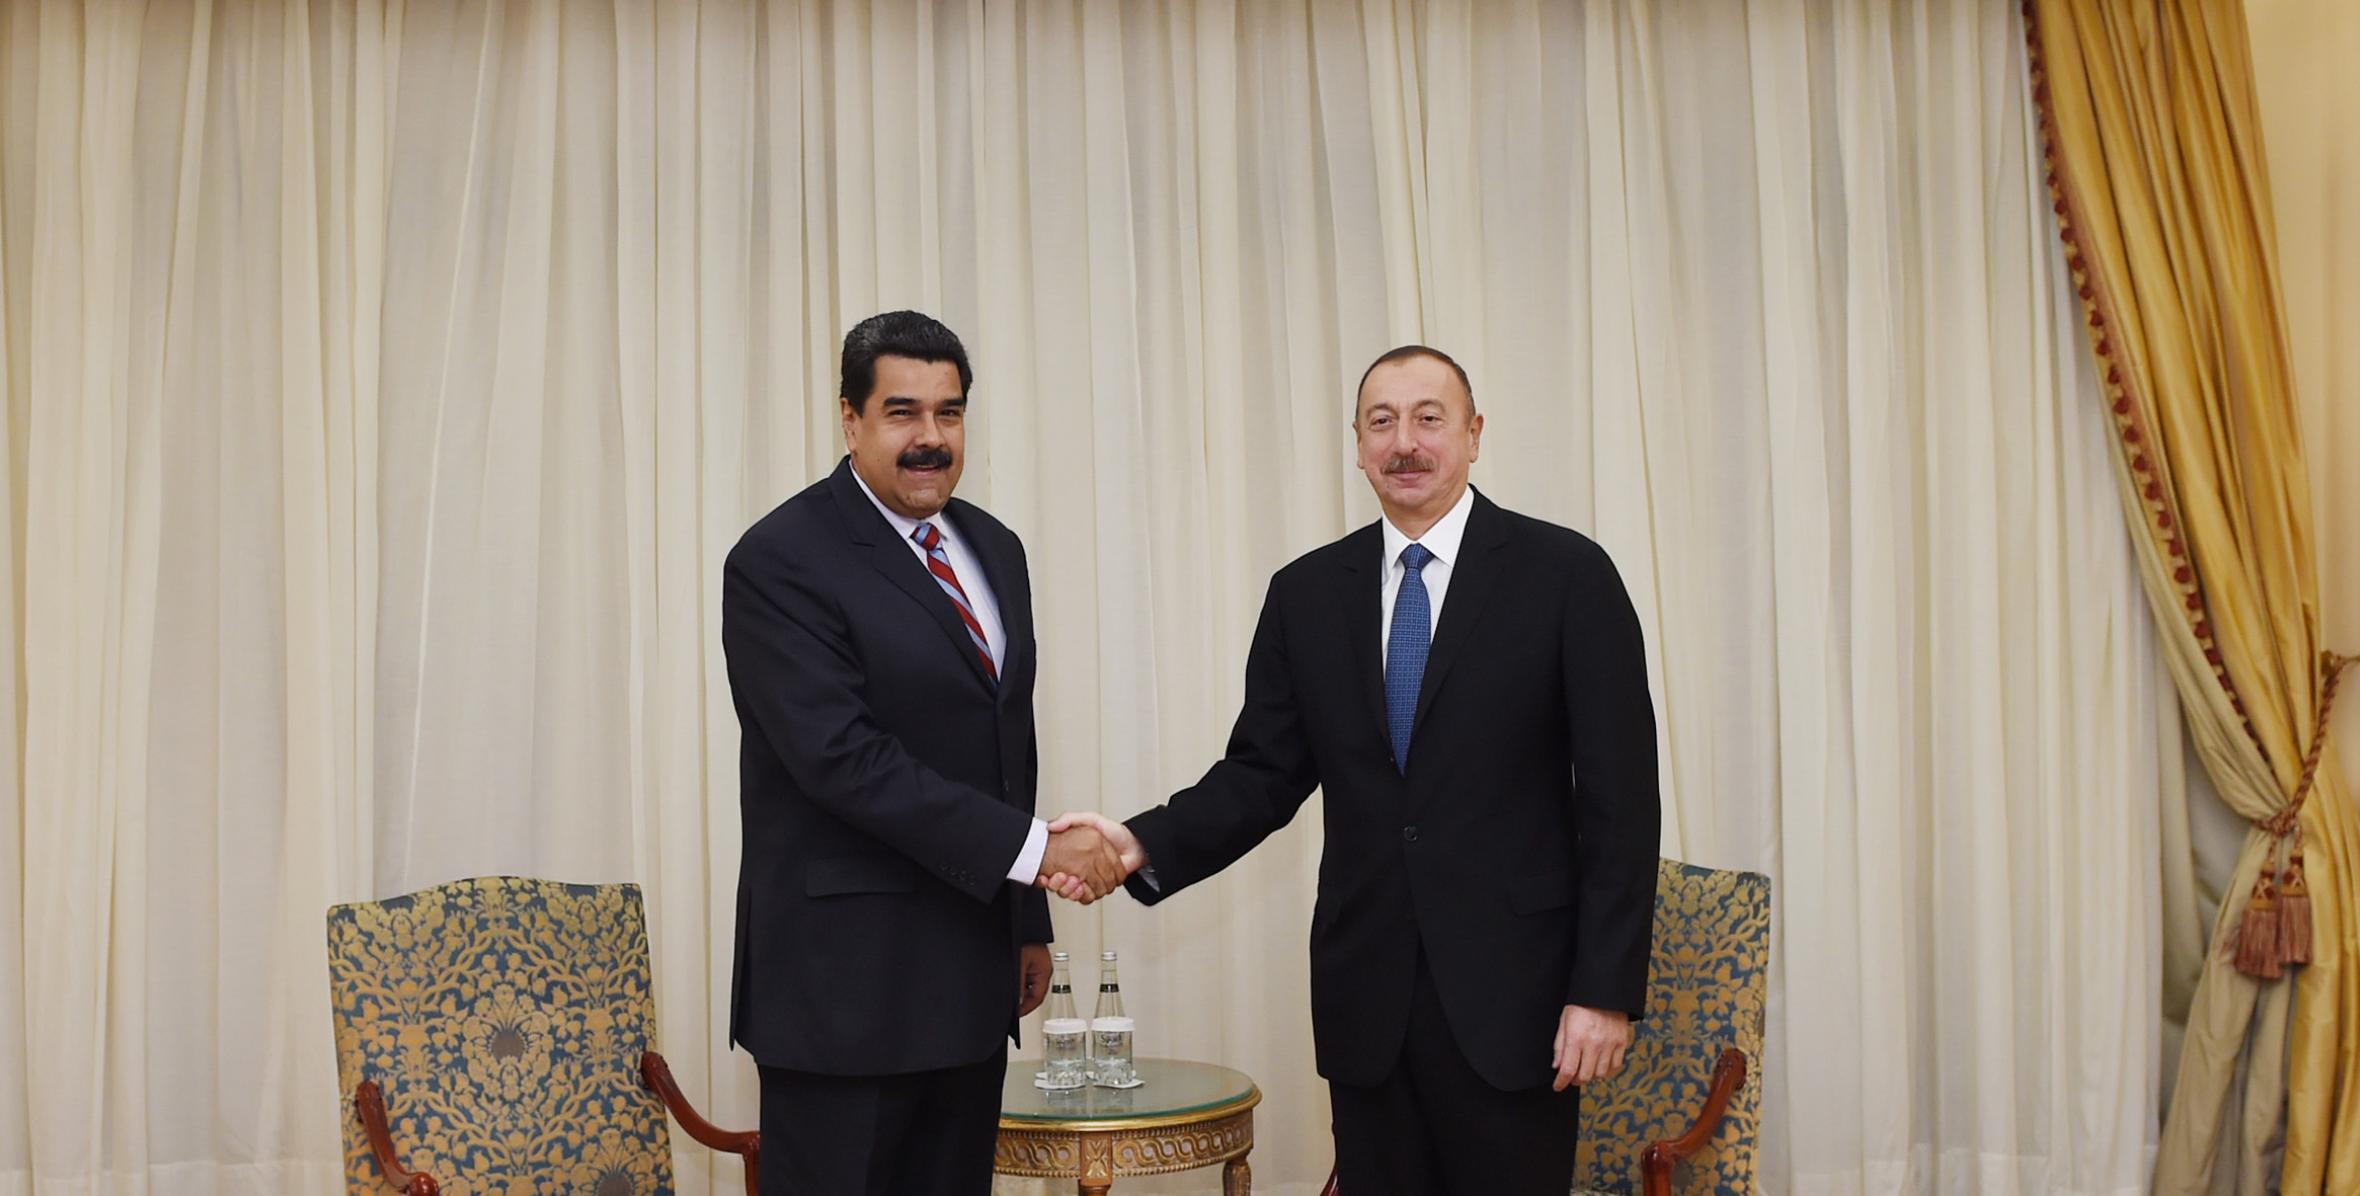 Ilham Aliyev met with Venezuelan President Nicolas Maduro in Istanbul